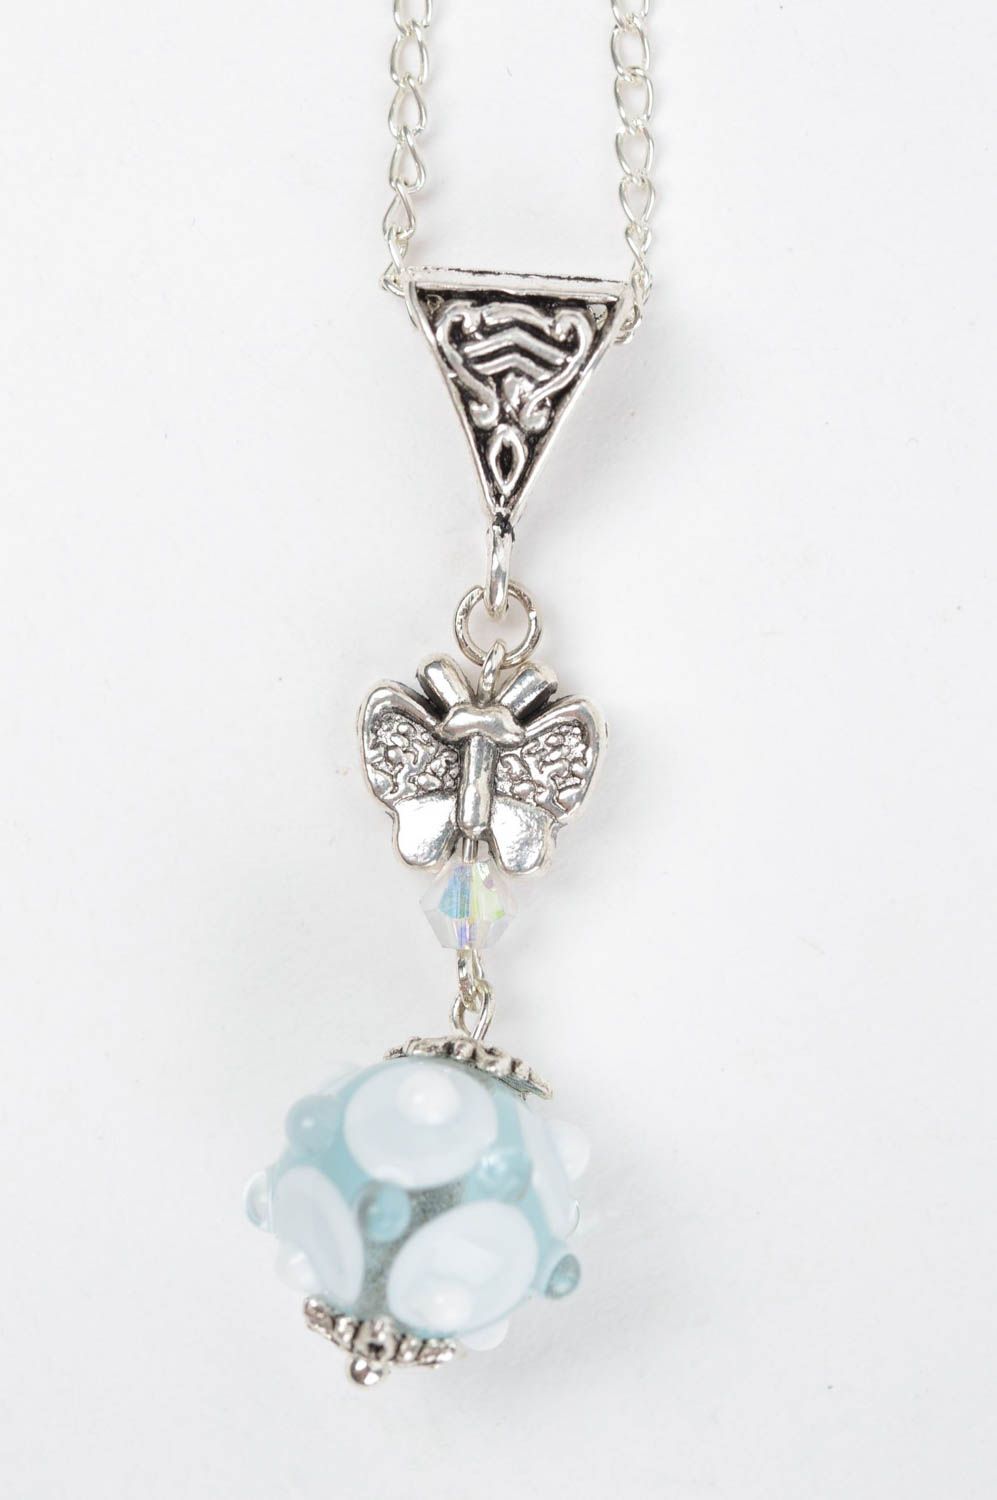 Beautiful handmade glass pendant neck pendant design lampwork pendant gift ideas photo 2